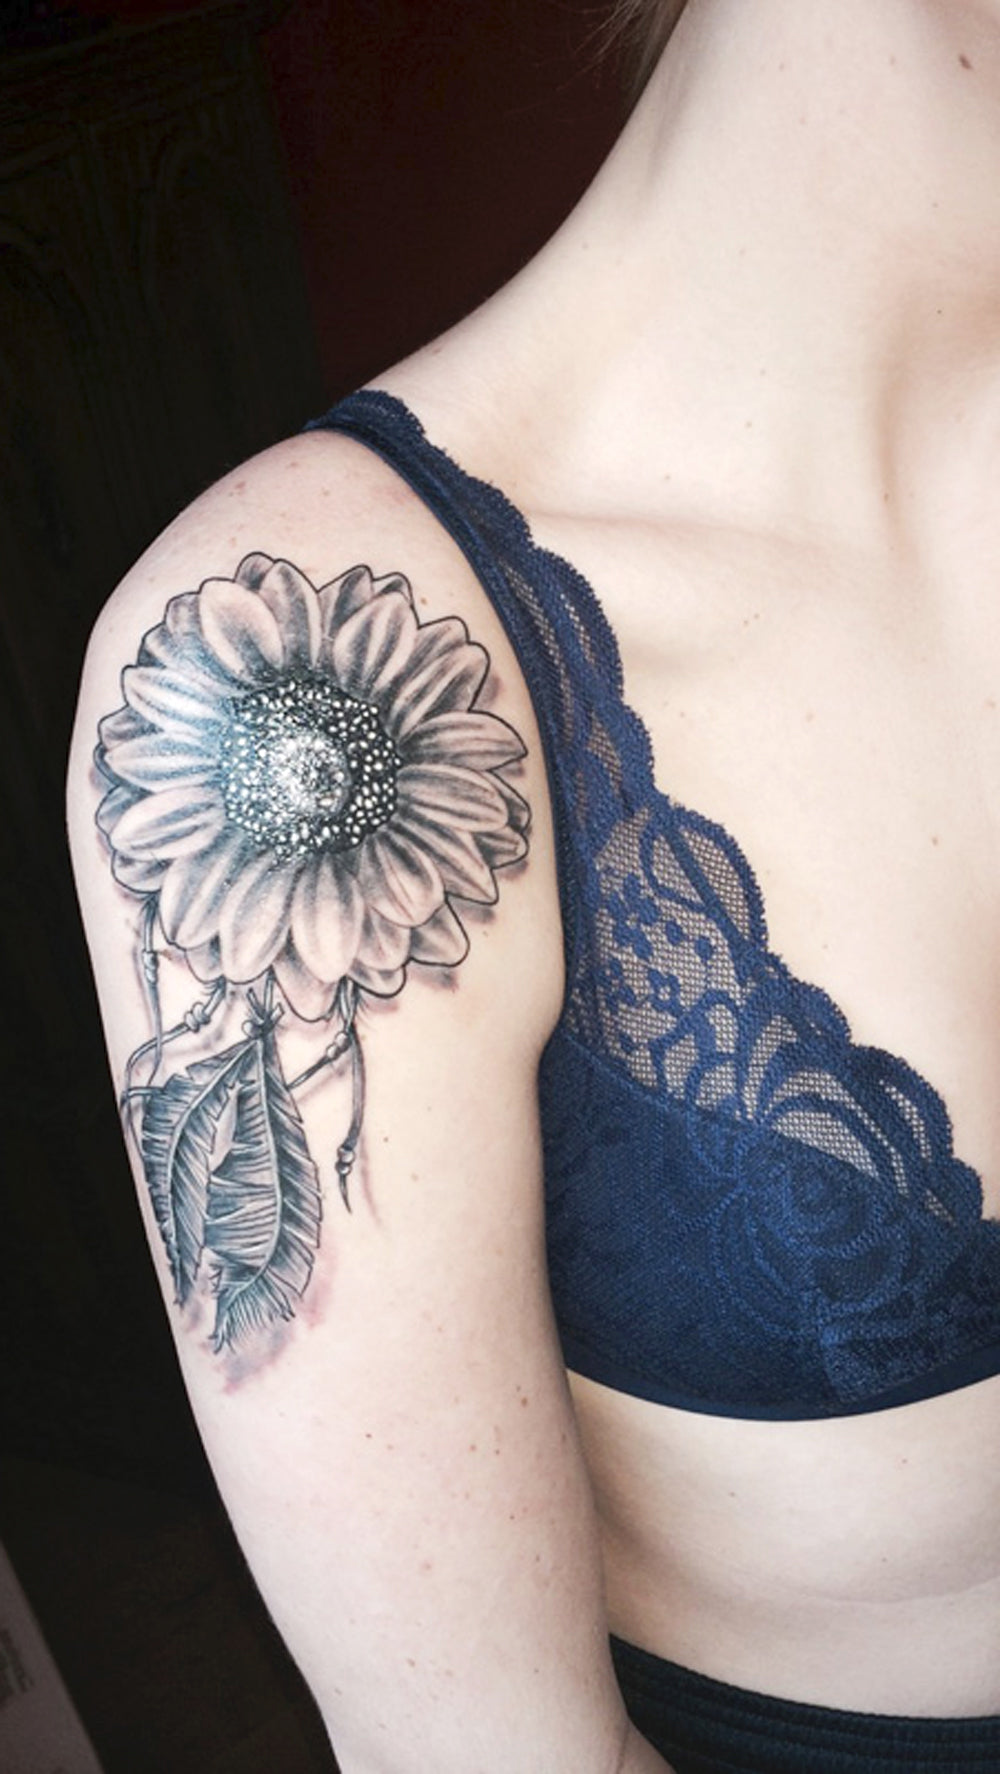 Realistic Sunflower Arm Shoulder Tattoo Ideas for Women - Black Henna Flower Tat -  ideas de girasol hombro tatuaje para mujeres - www.MyBodiArt.com